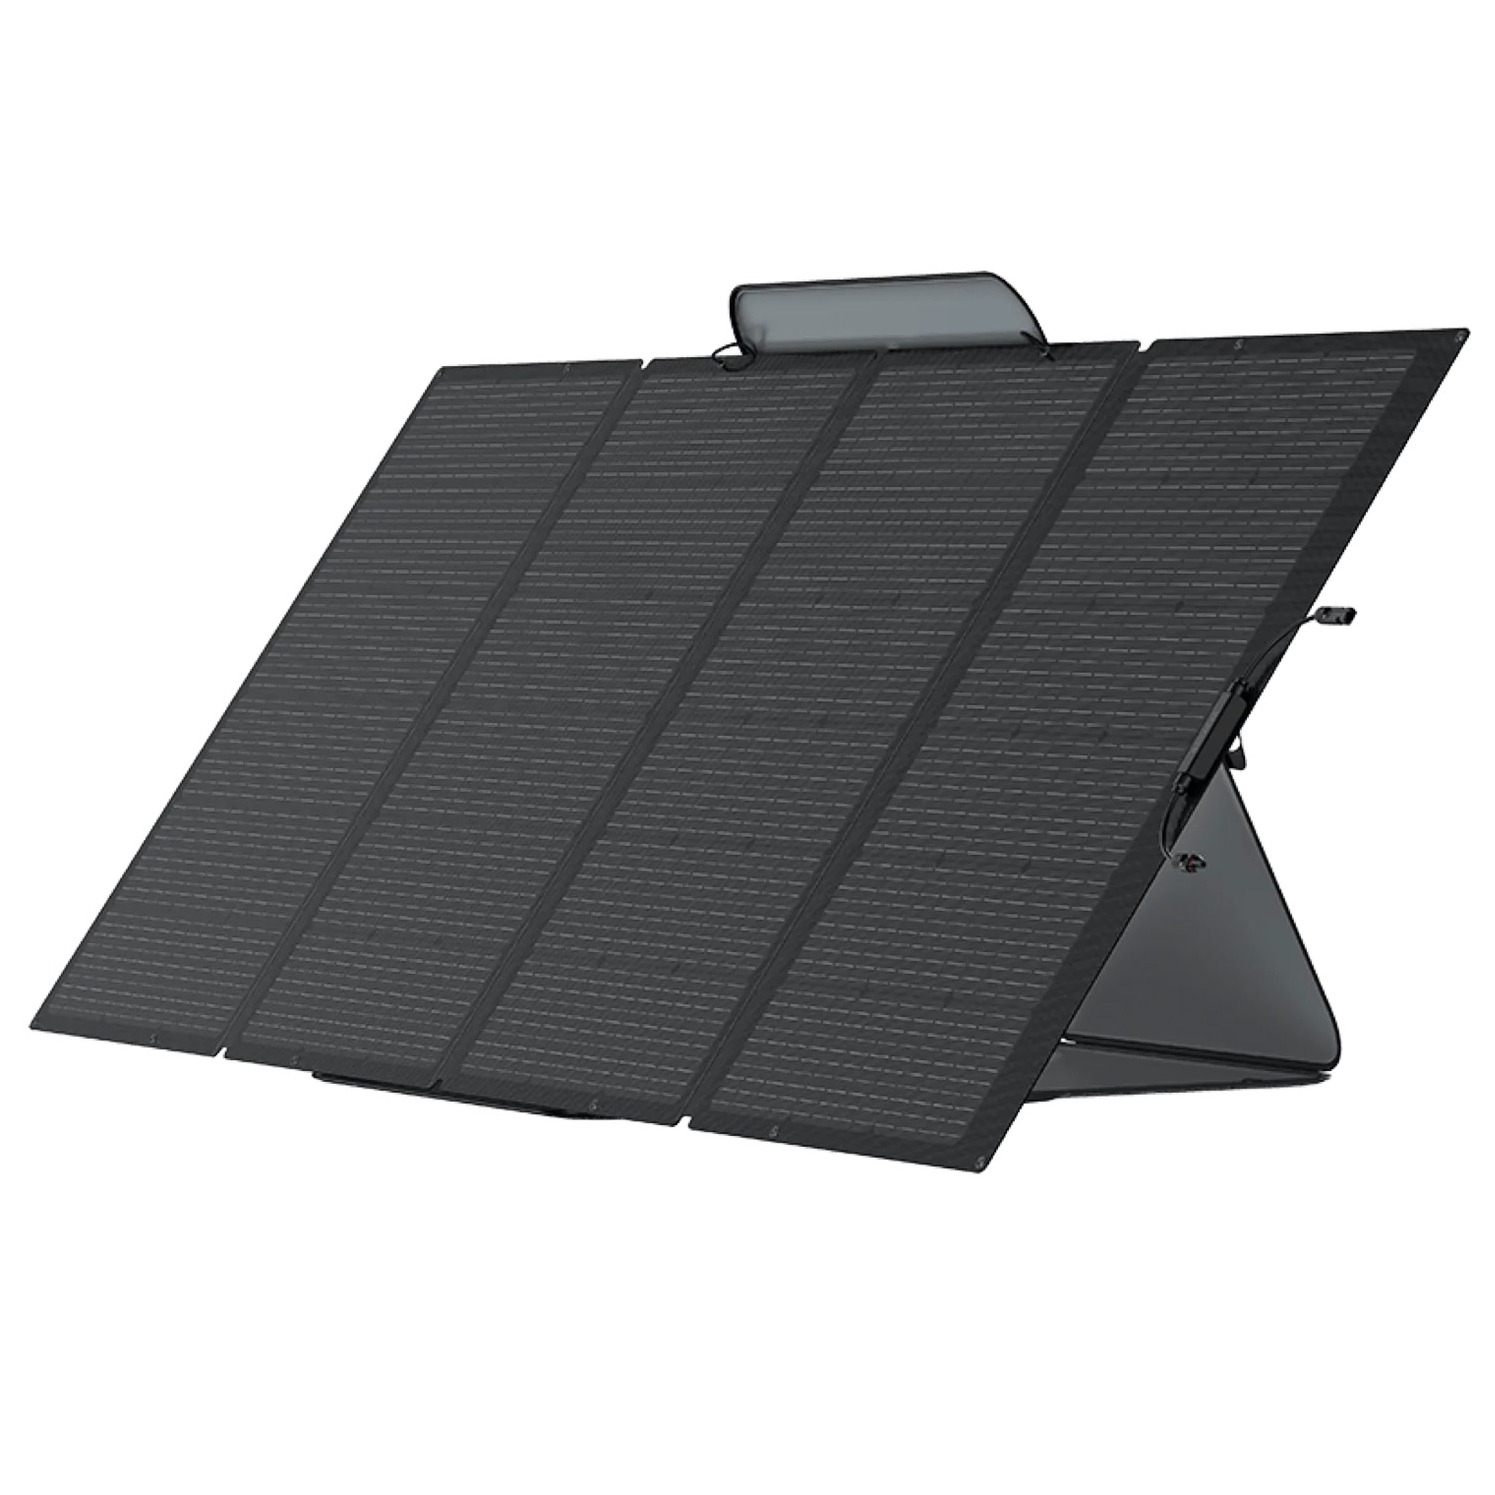 EcoFlow 400W Tragbares Solarpanel Artikel Nr. 44-600-1006